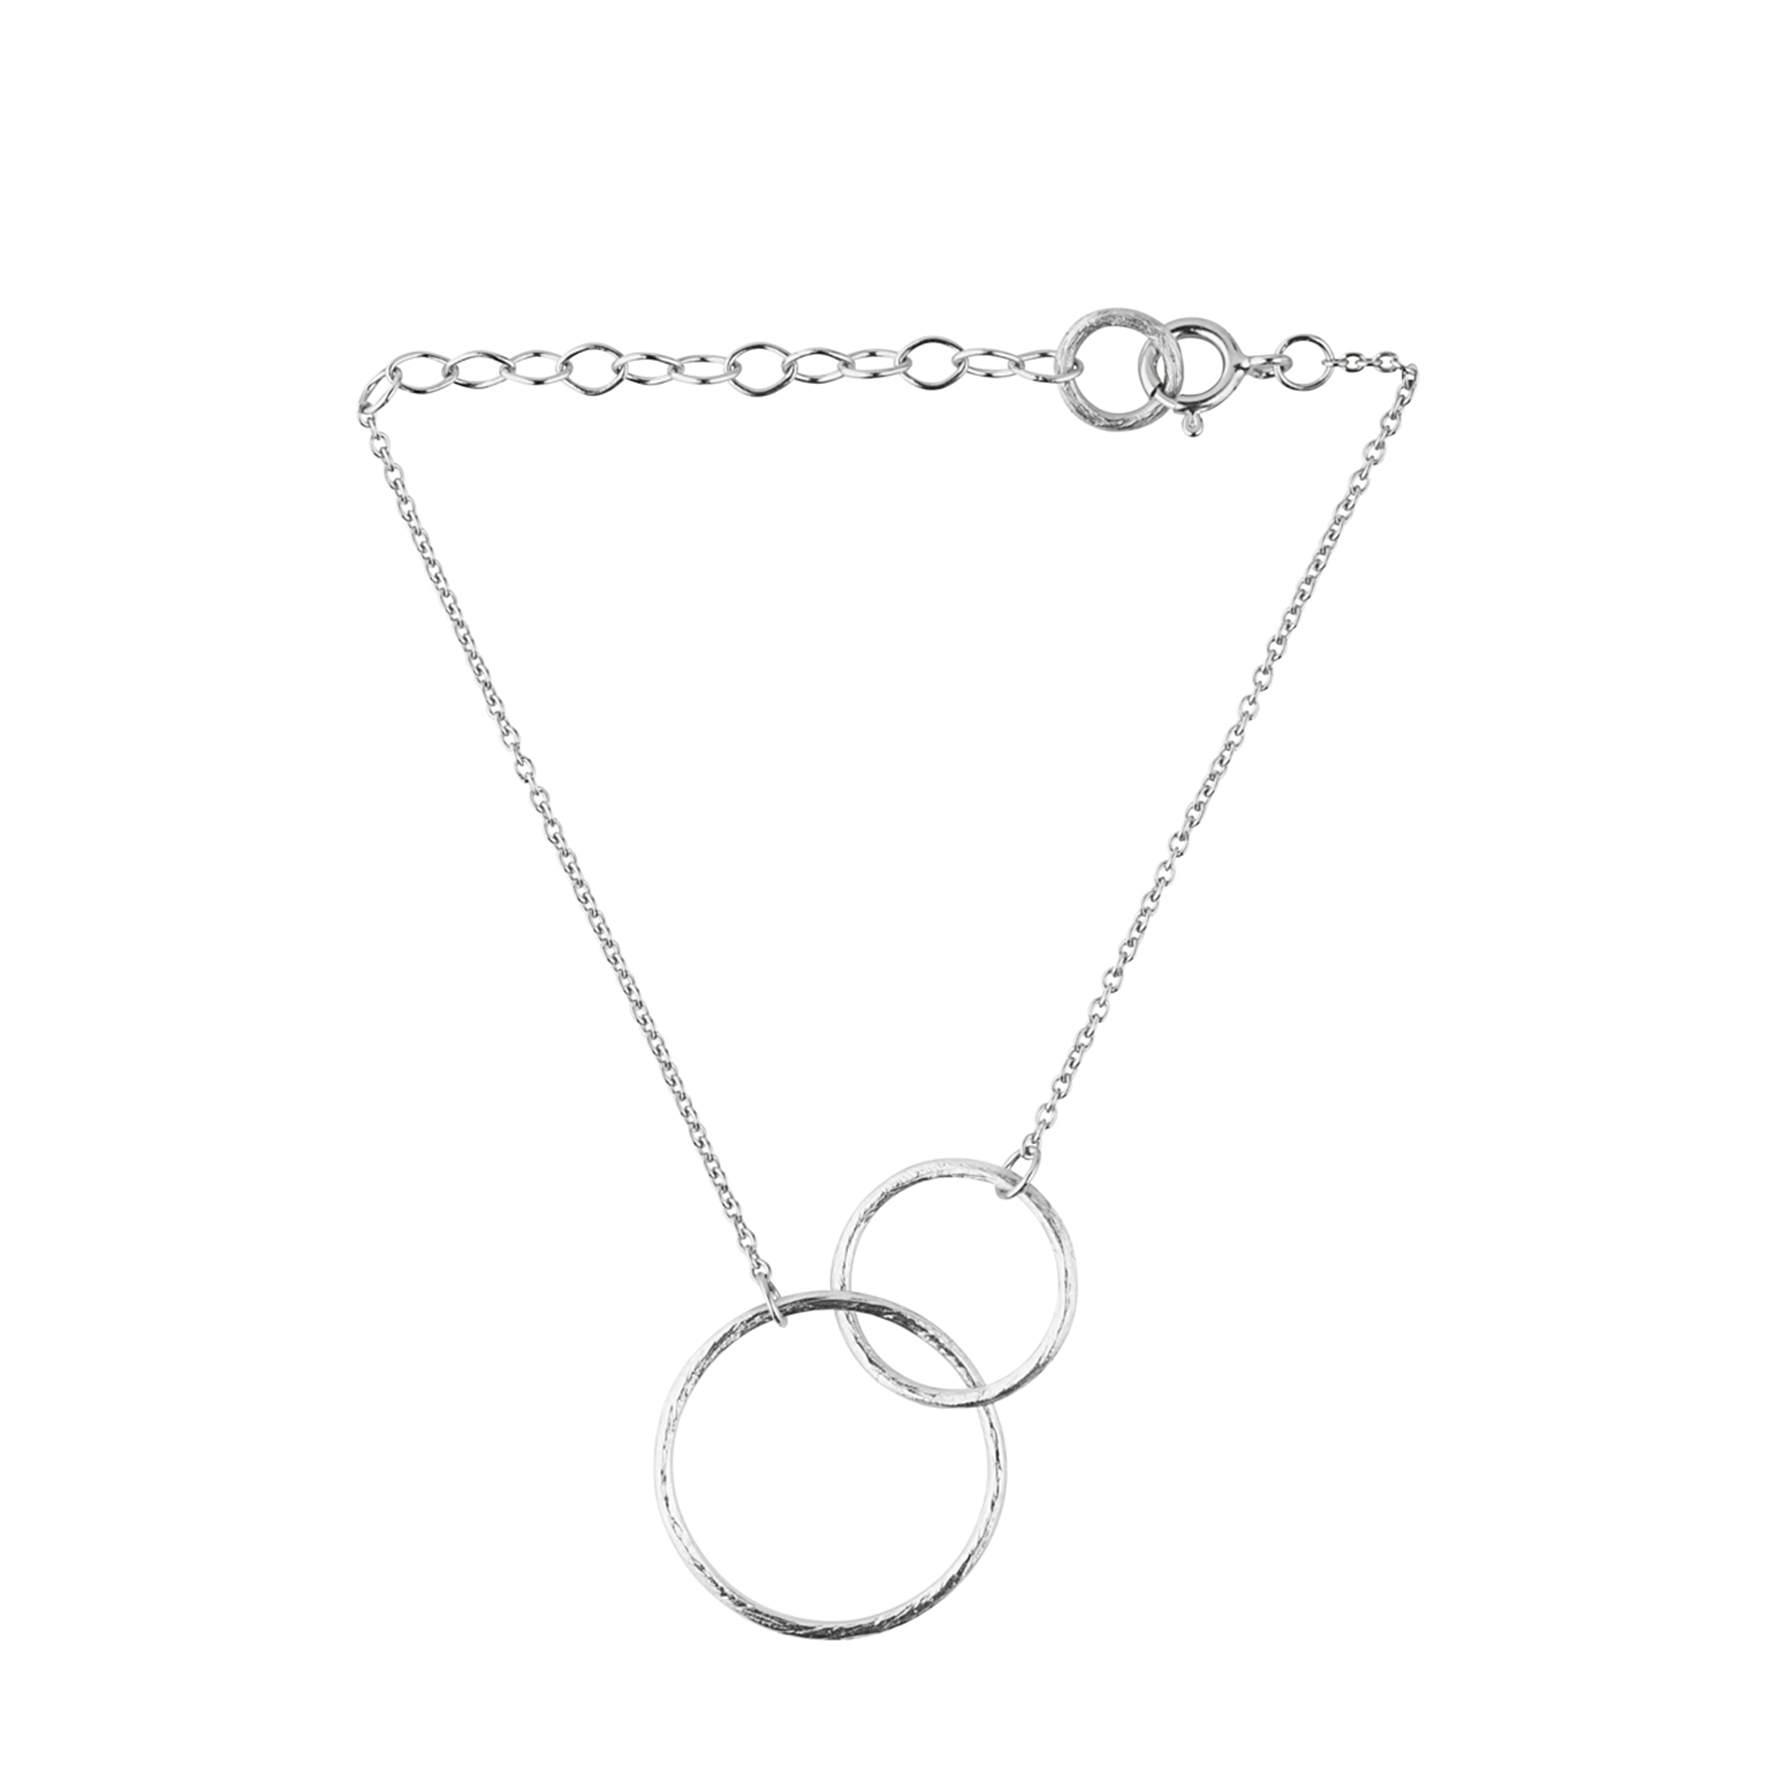 Double plain bracelet von Pernille Corydon in Silber Sterling 925